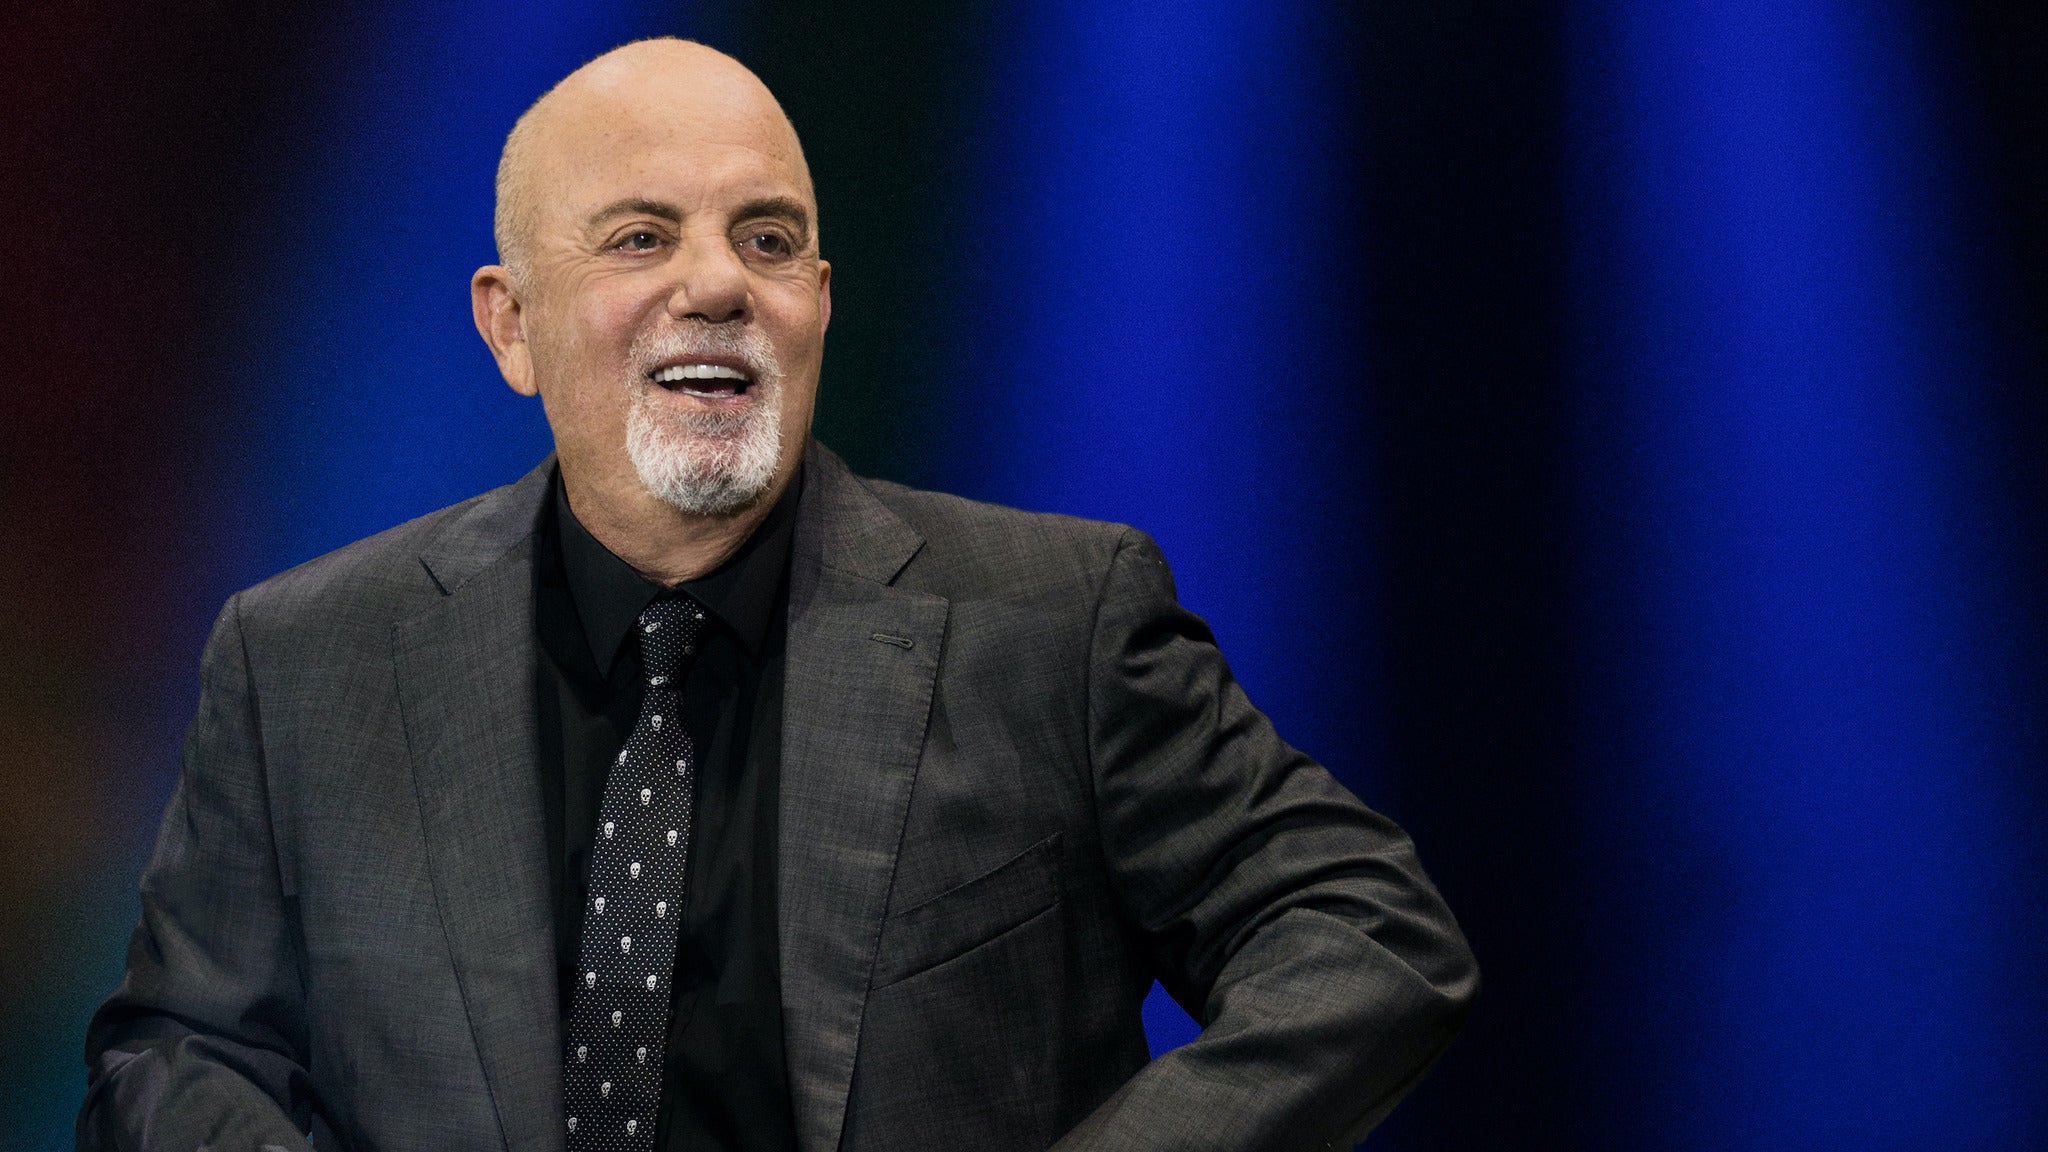 Billy Joel - In Concert pre-sale code for legit tickets in New York